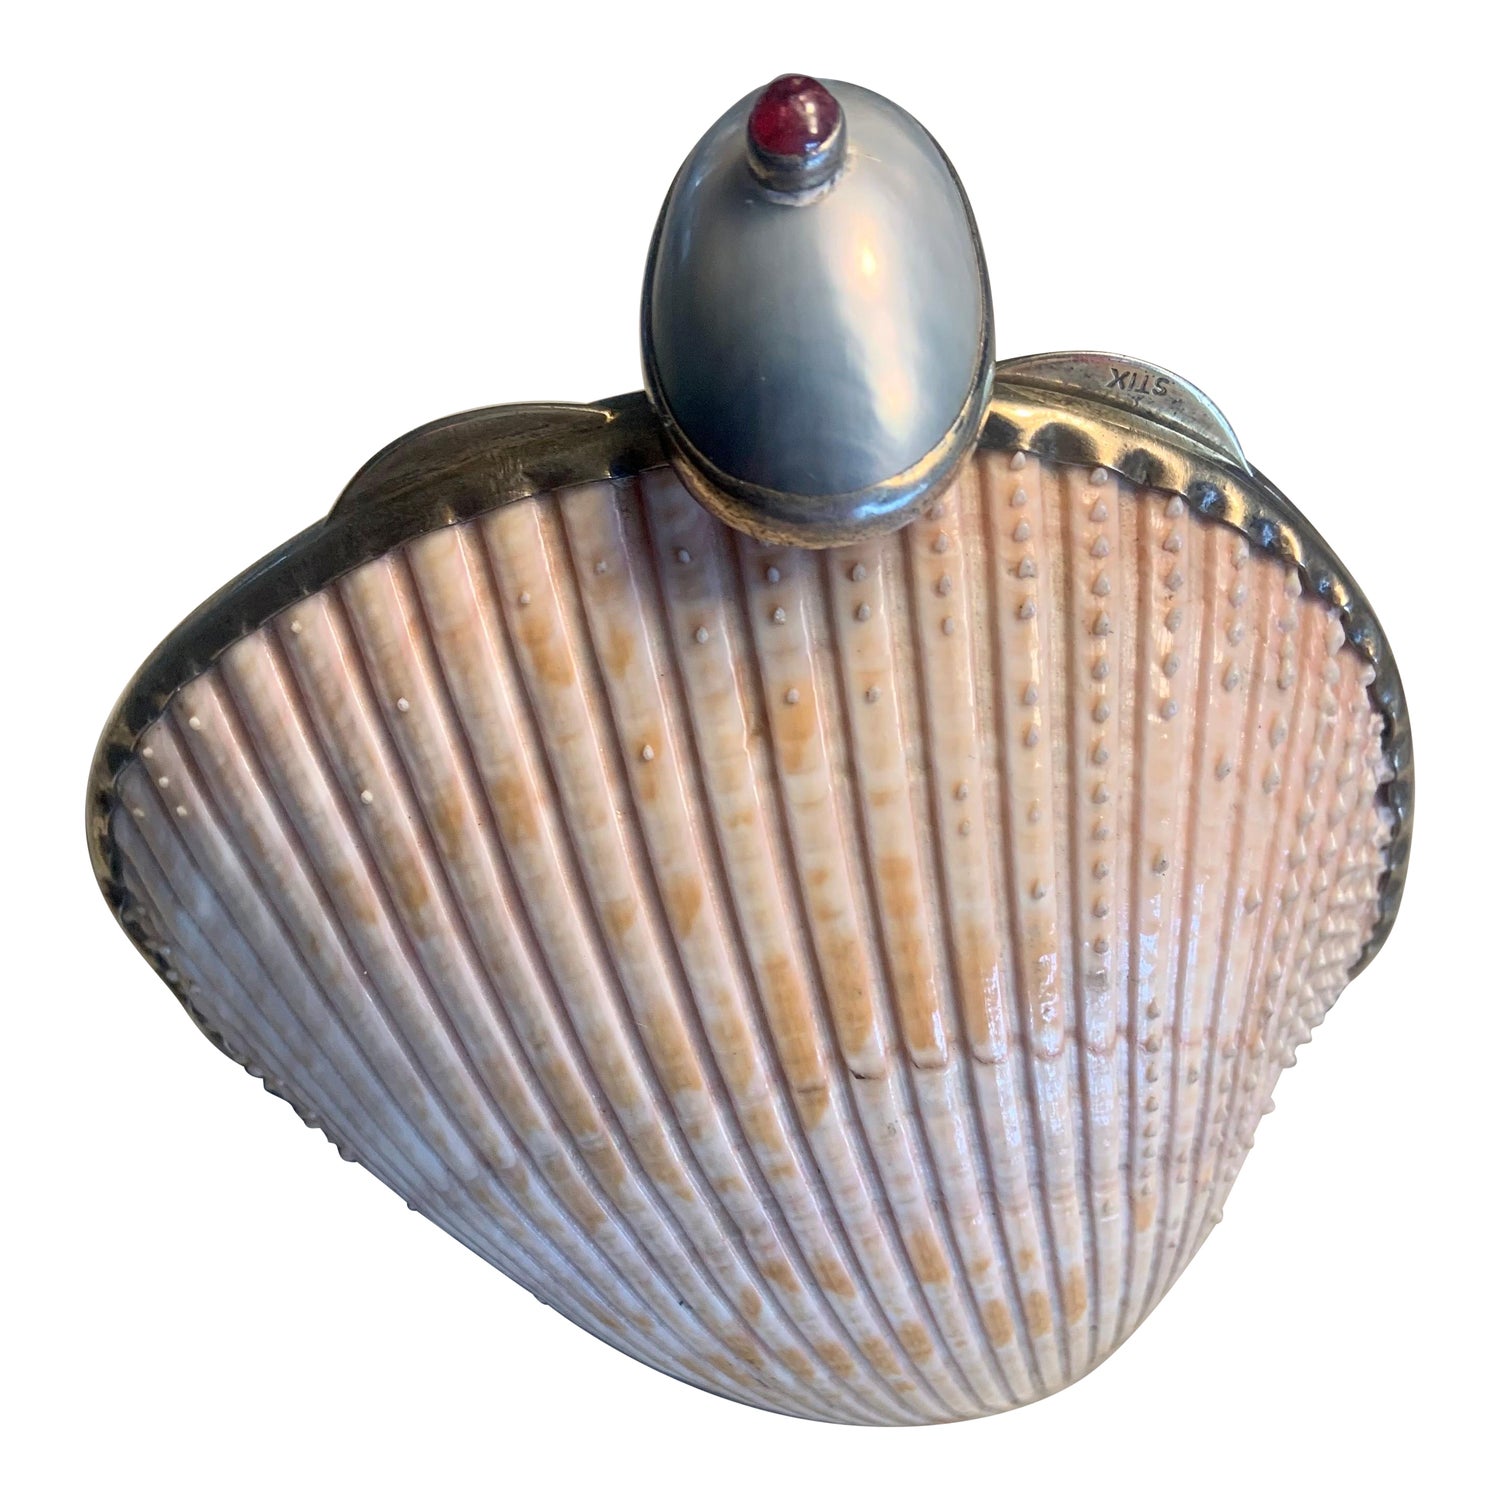 chanel clam shell bag